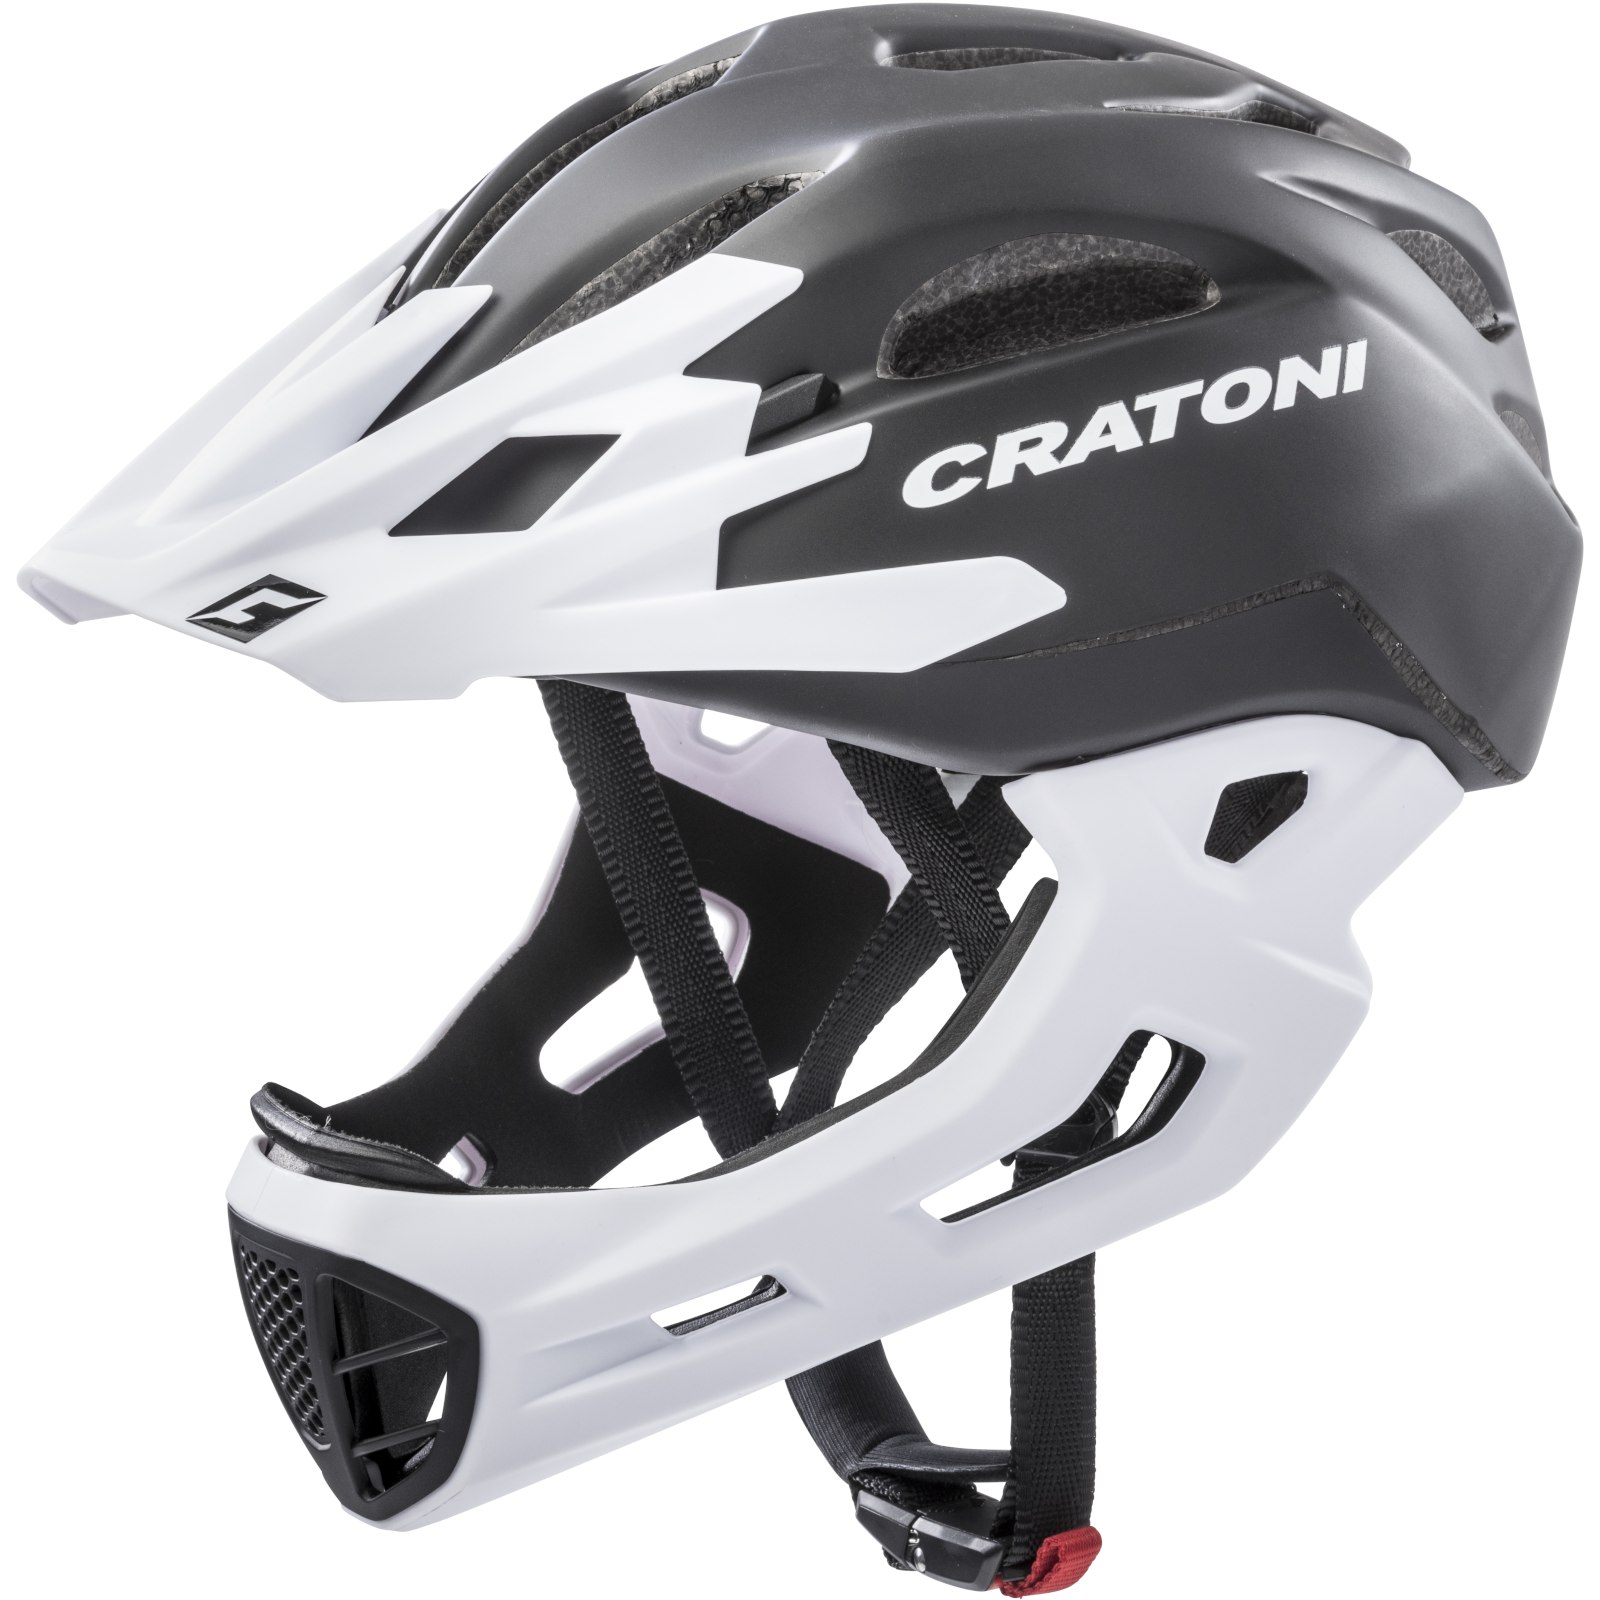 Productfoto van CRATONI C-Maniac Fullface Helmet - black-white matt